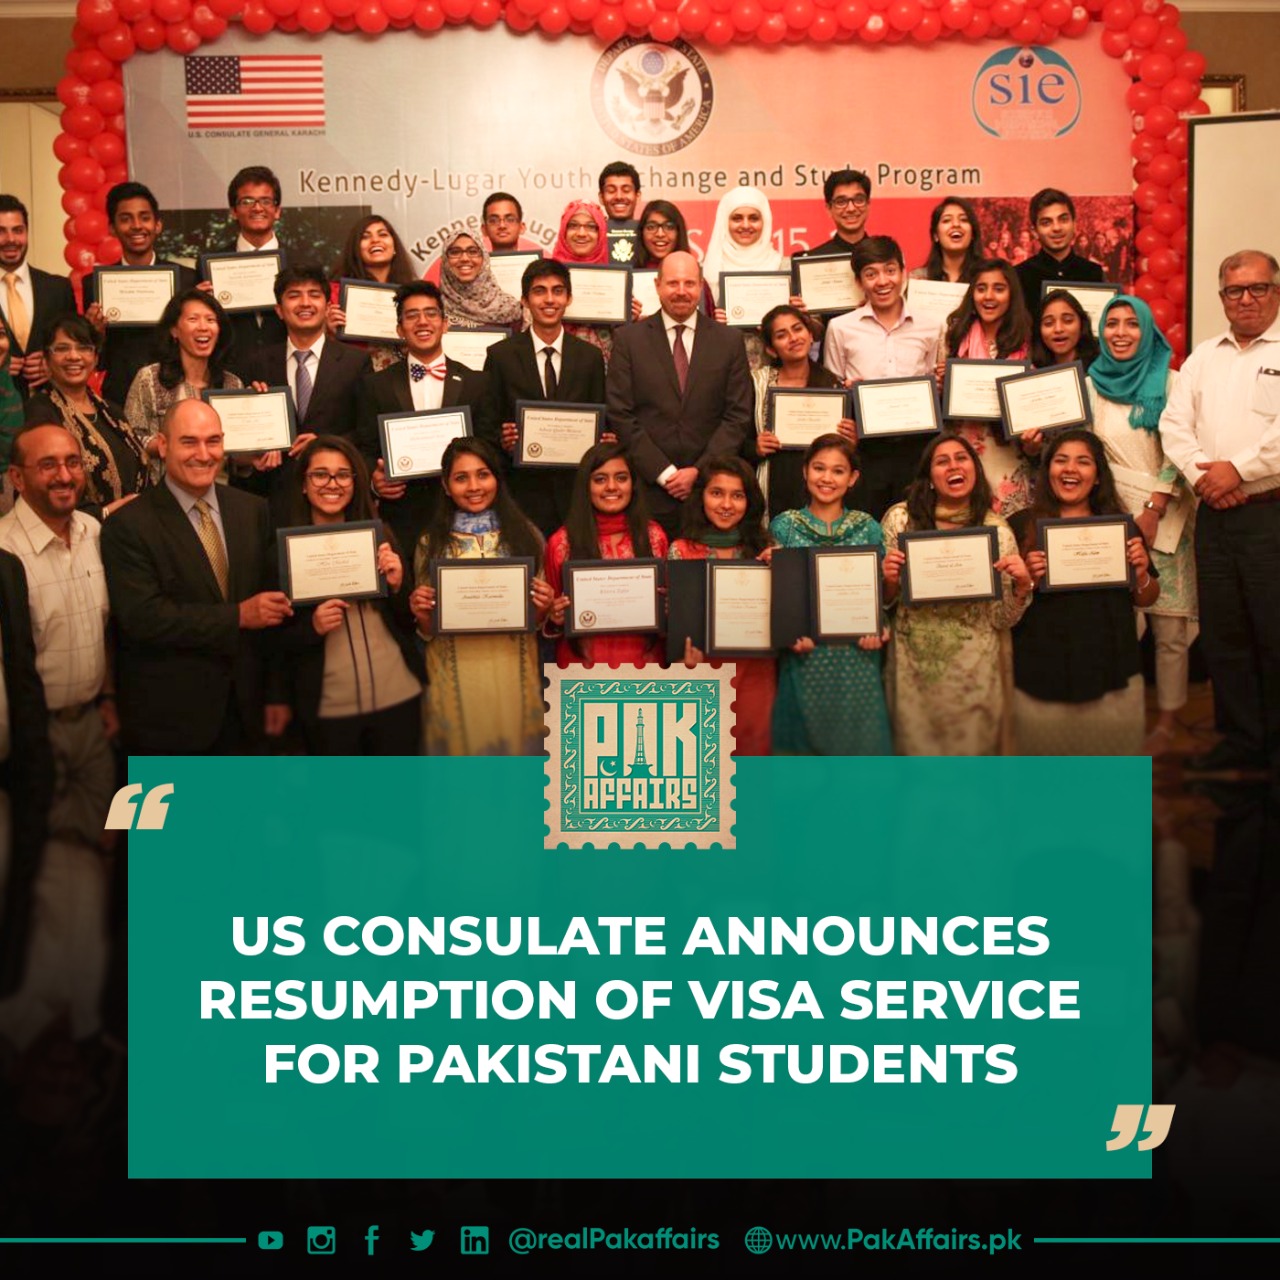 US Consulate announces resumption of visa service for Pakistani students